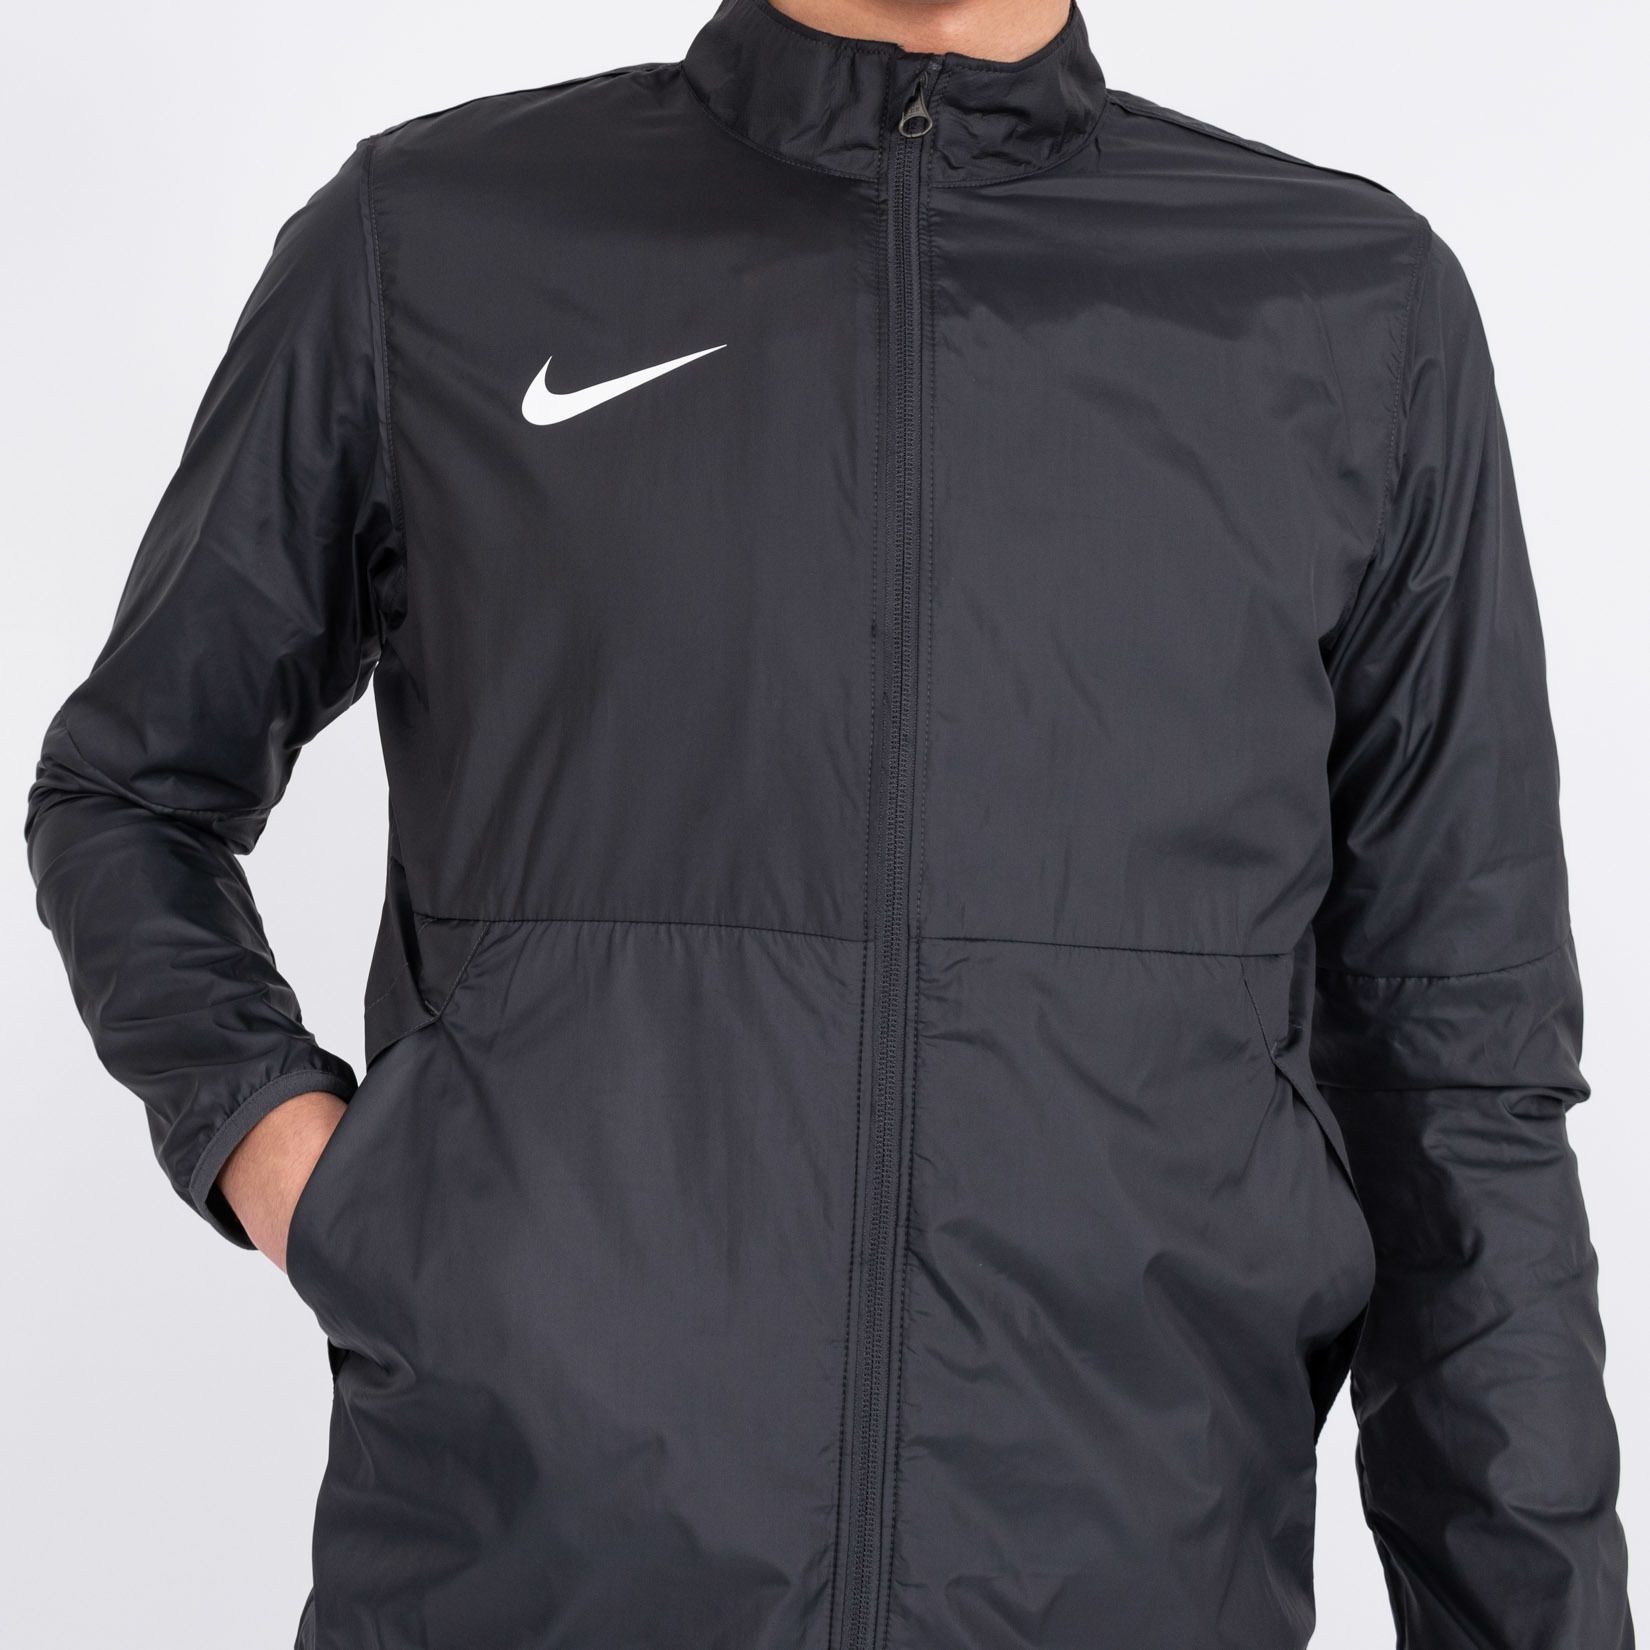 Nike Repel Park 20 Rain Jacket - Kitlocker.com